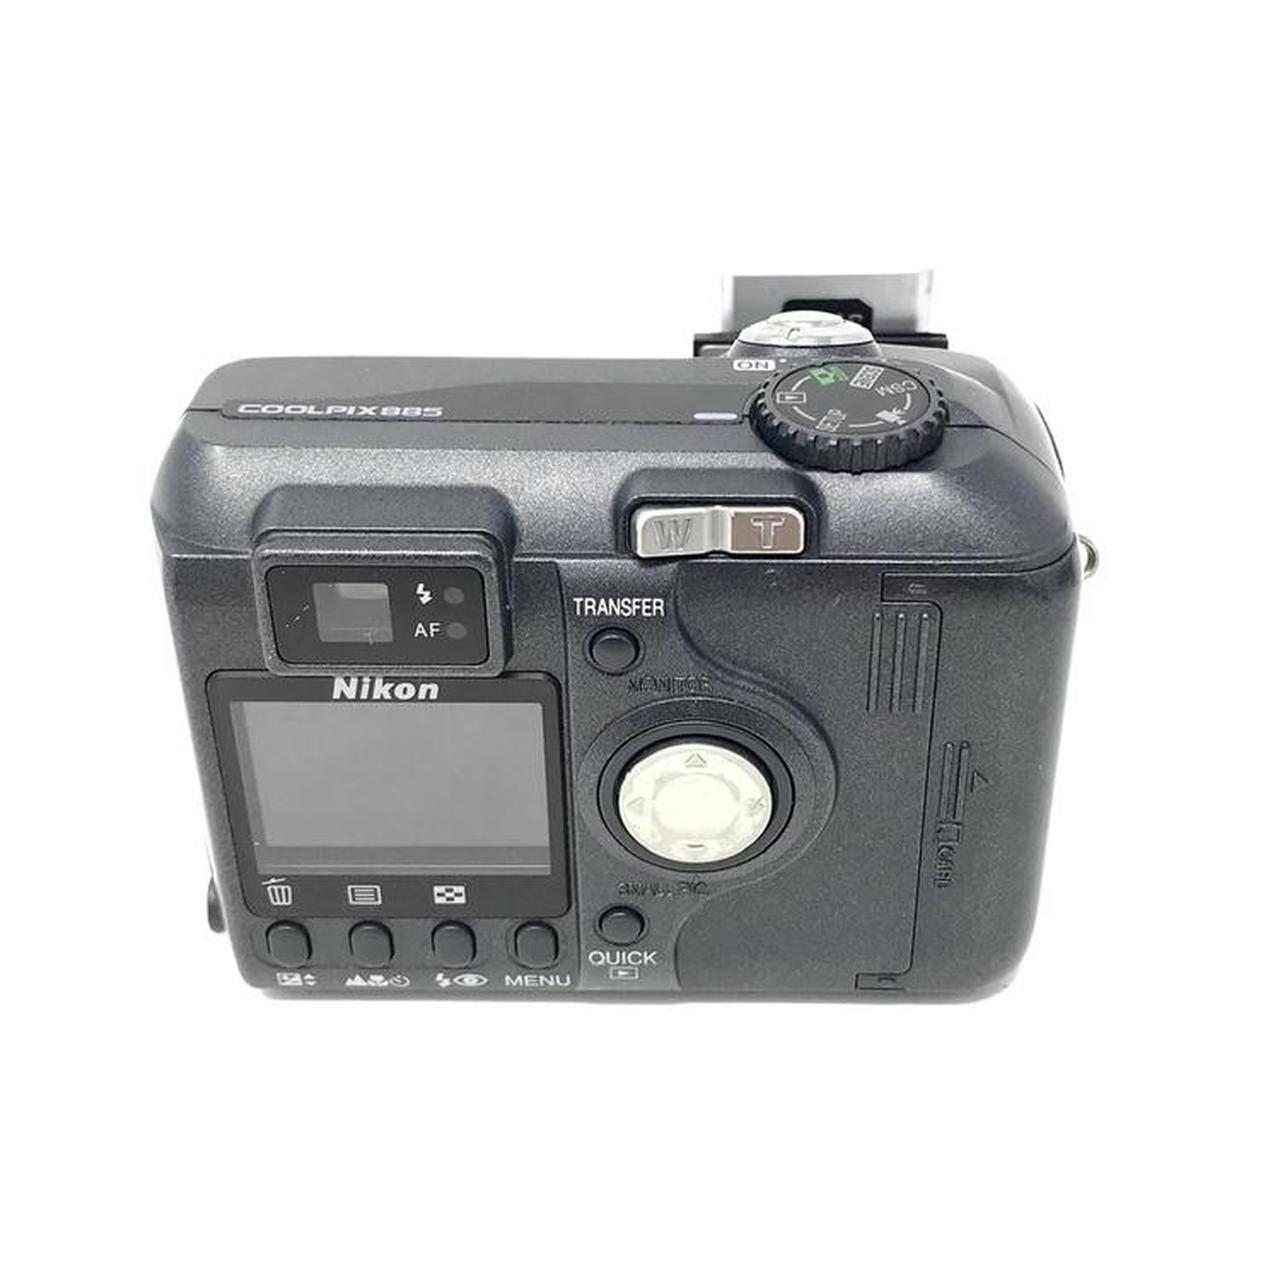 Product Image 3 - Nikon Coolpix 885 Digital Camera